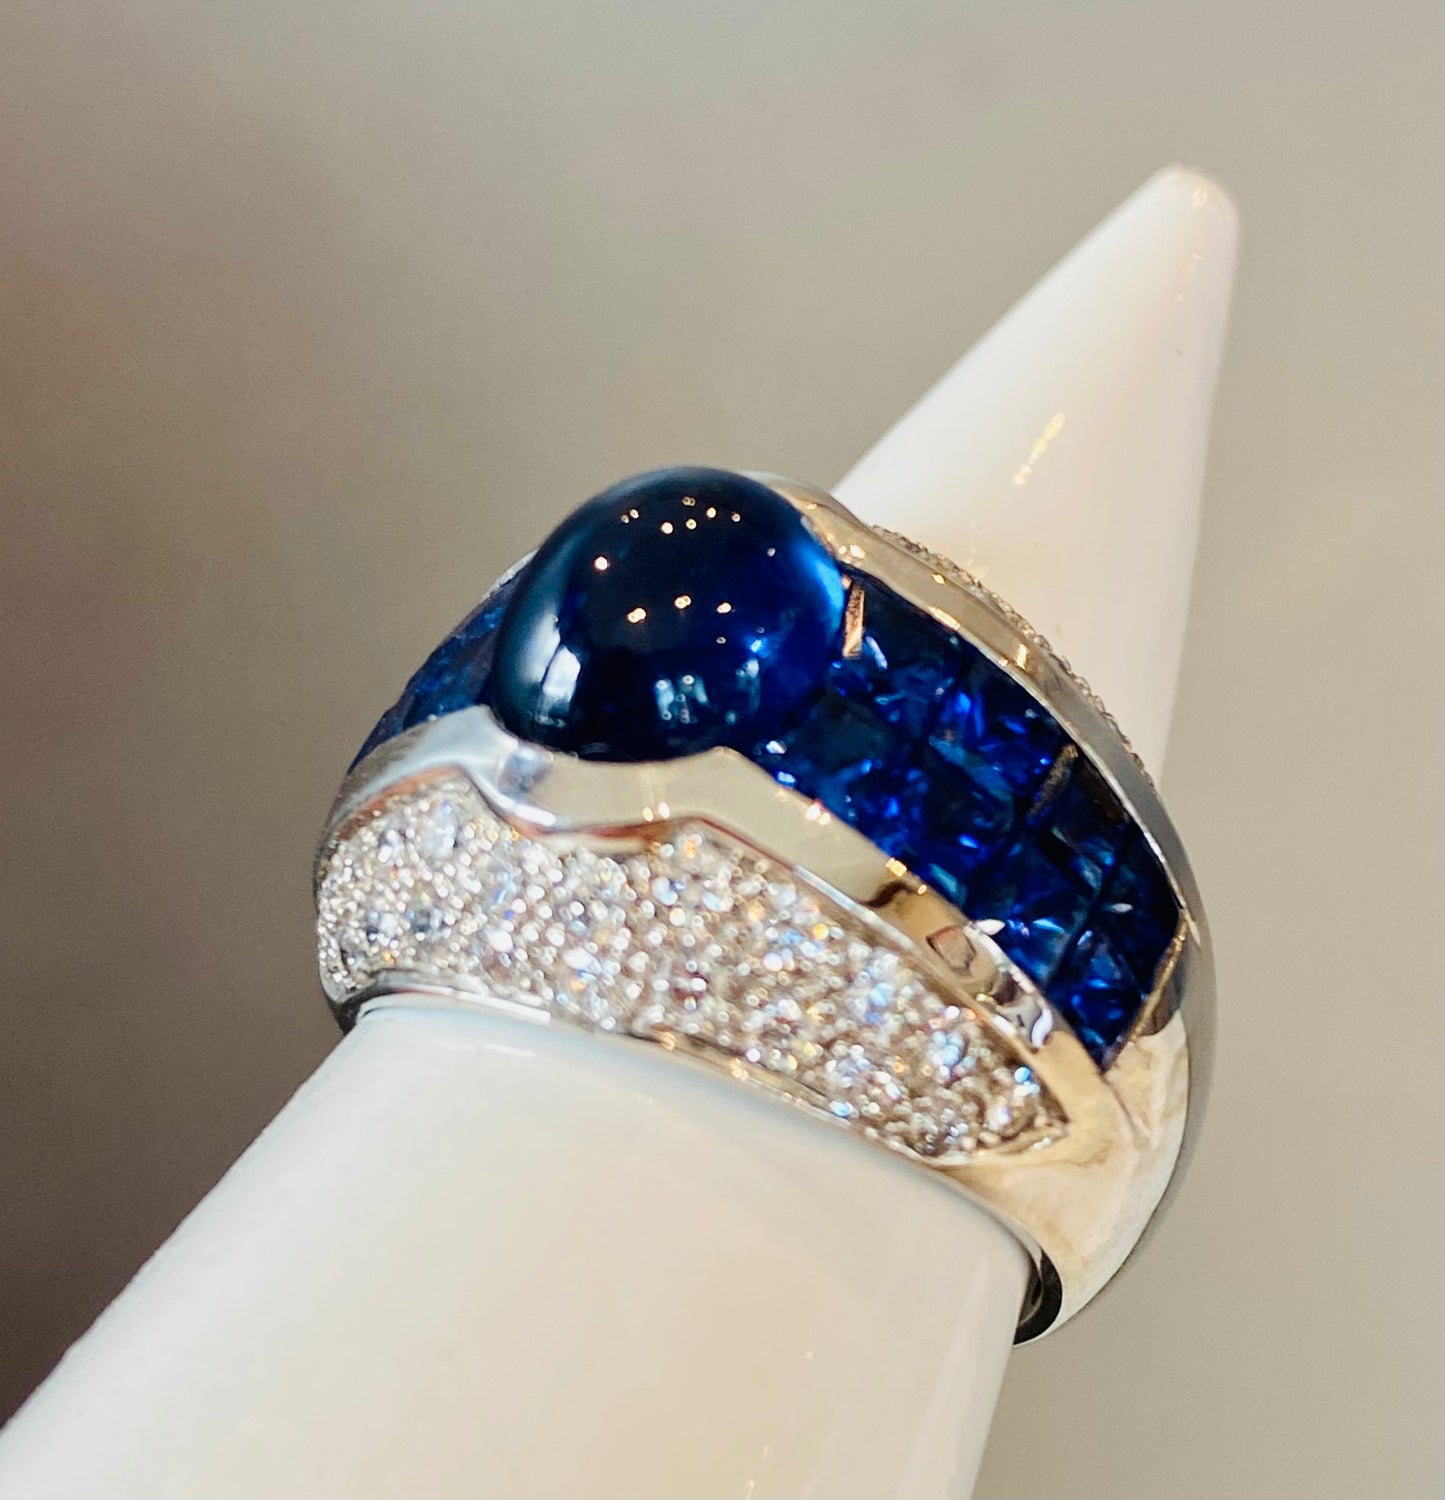 18K BLUE SAPPHIRE AND DIAMOND RING